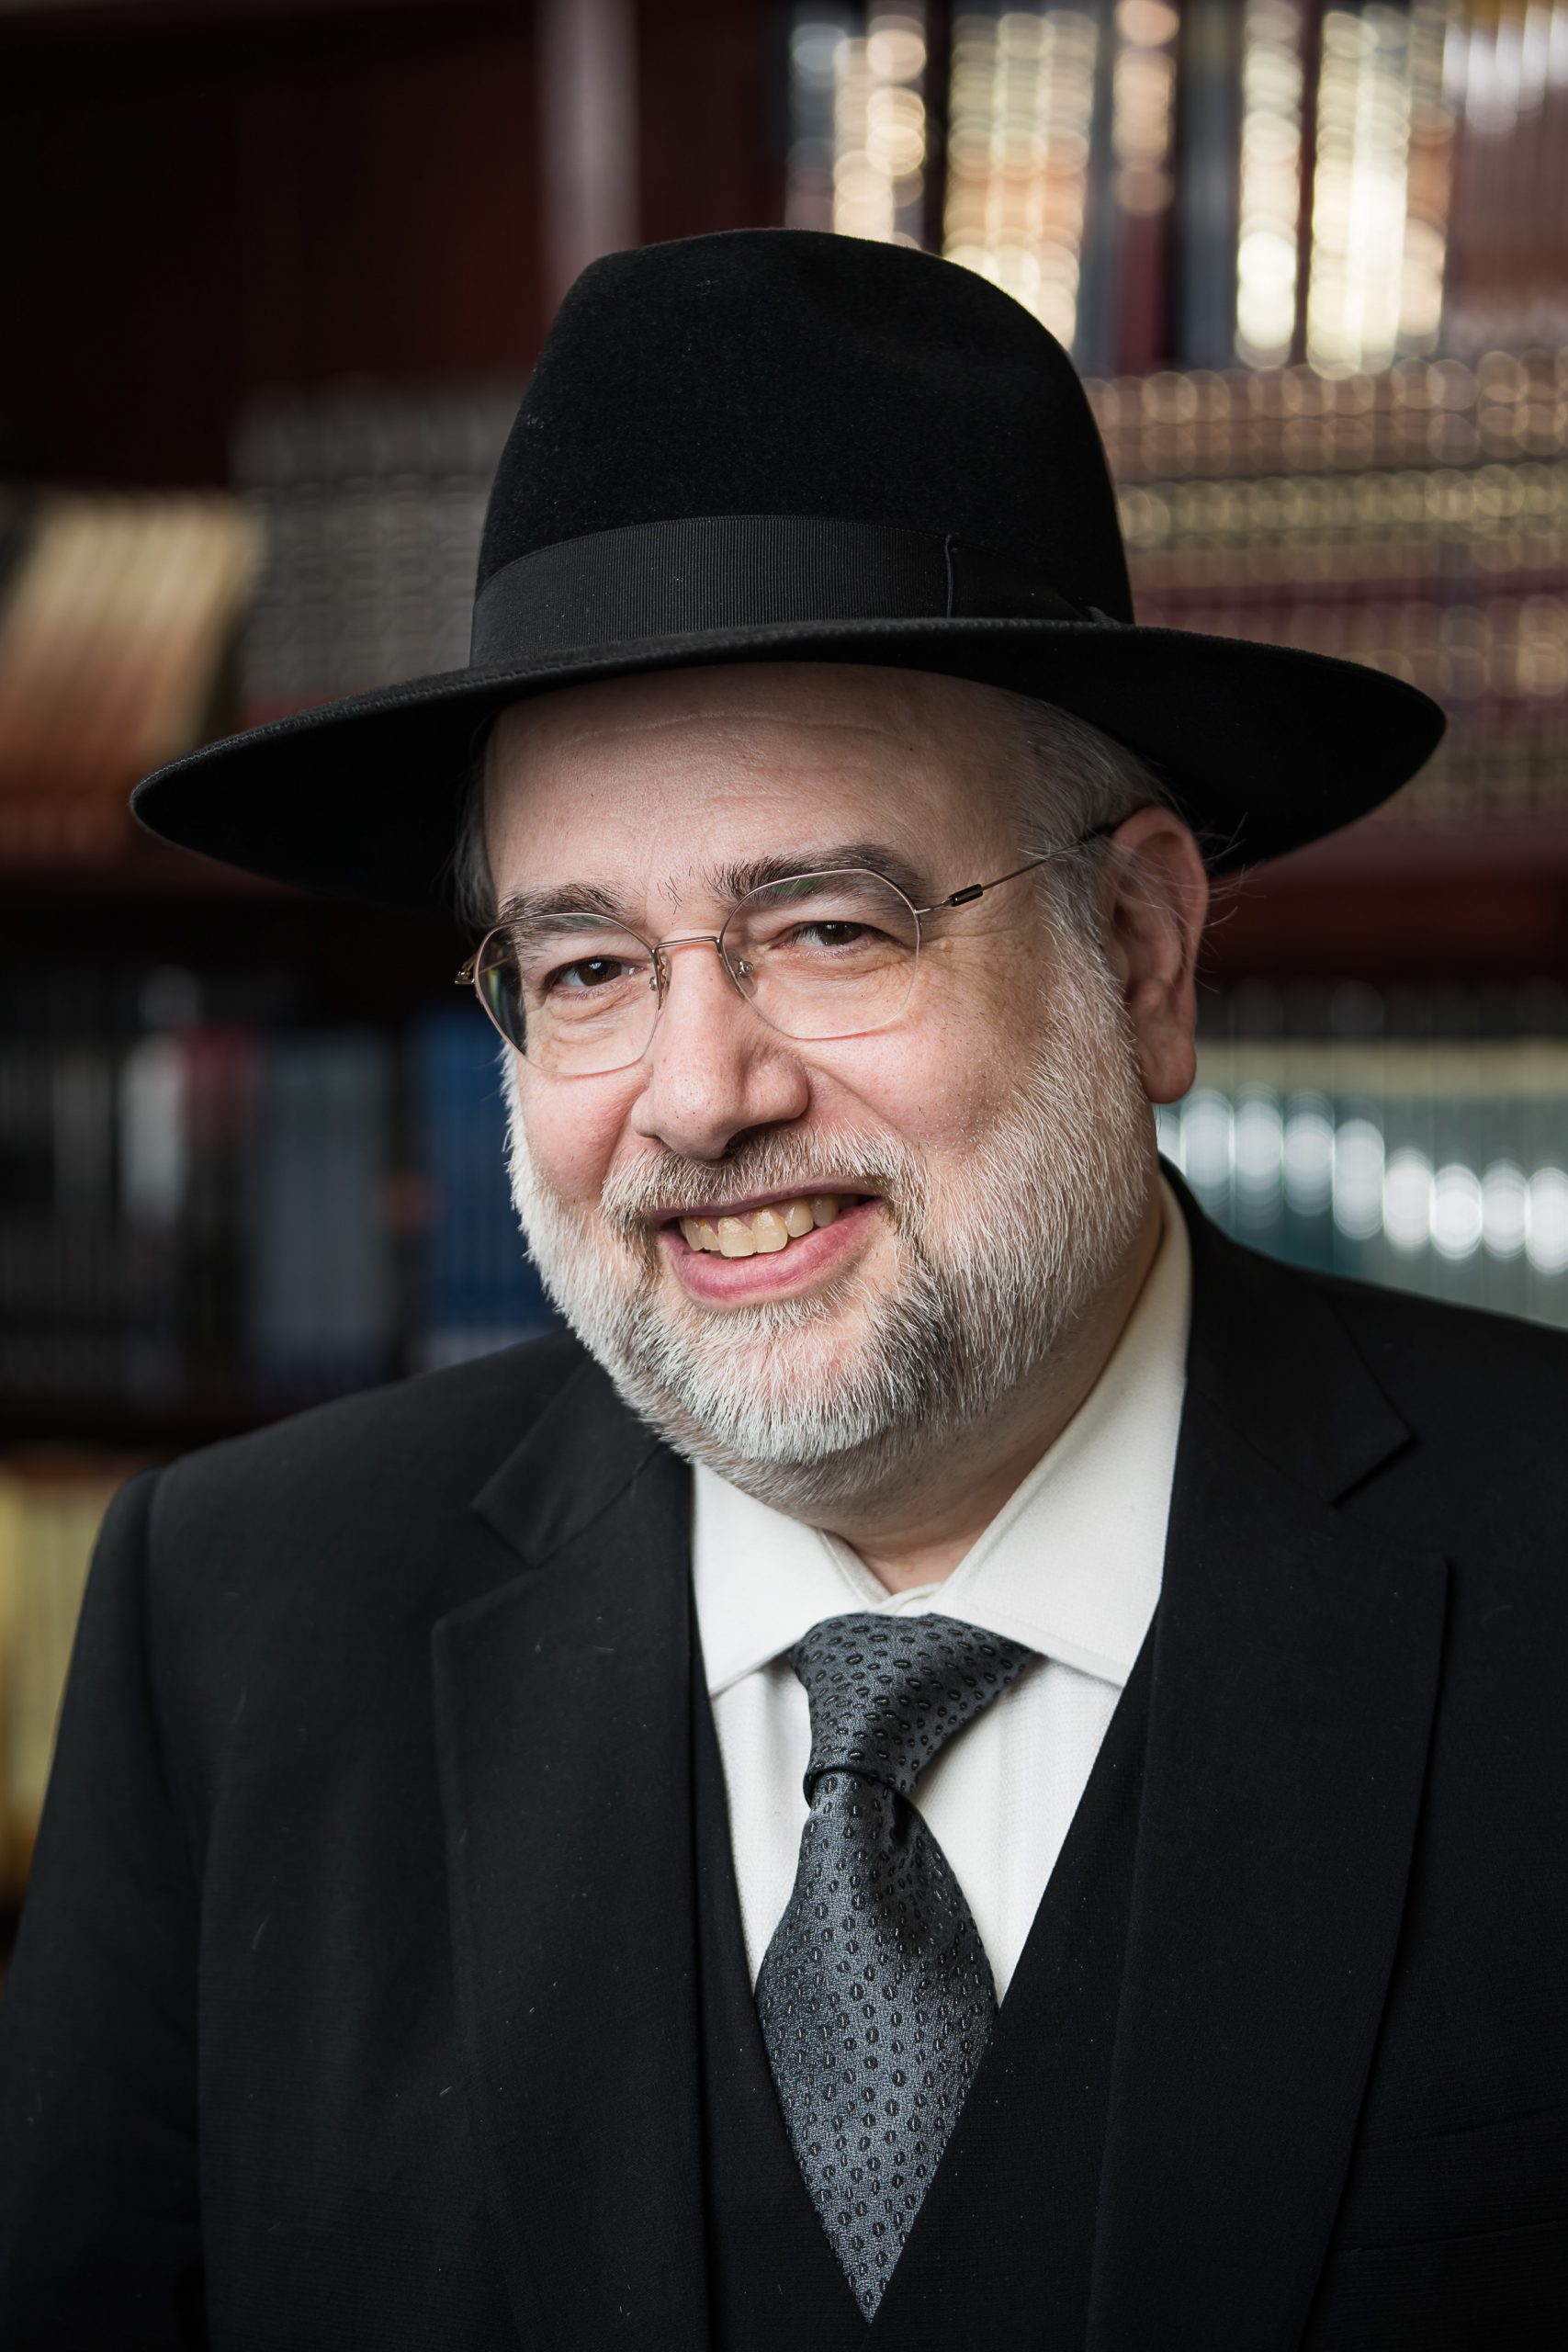 Rabbi Elefant: Don't Be That Guy